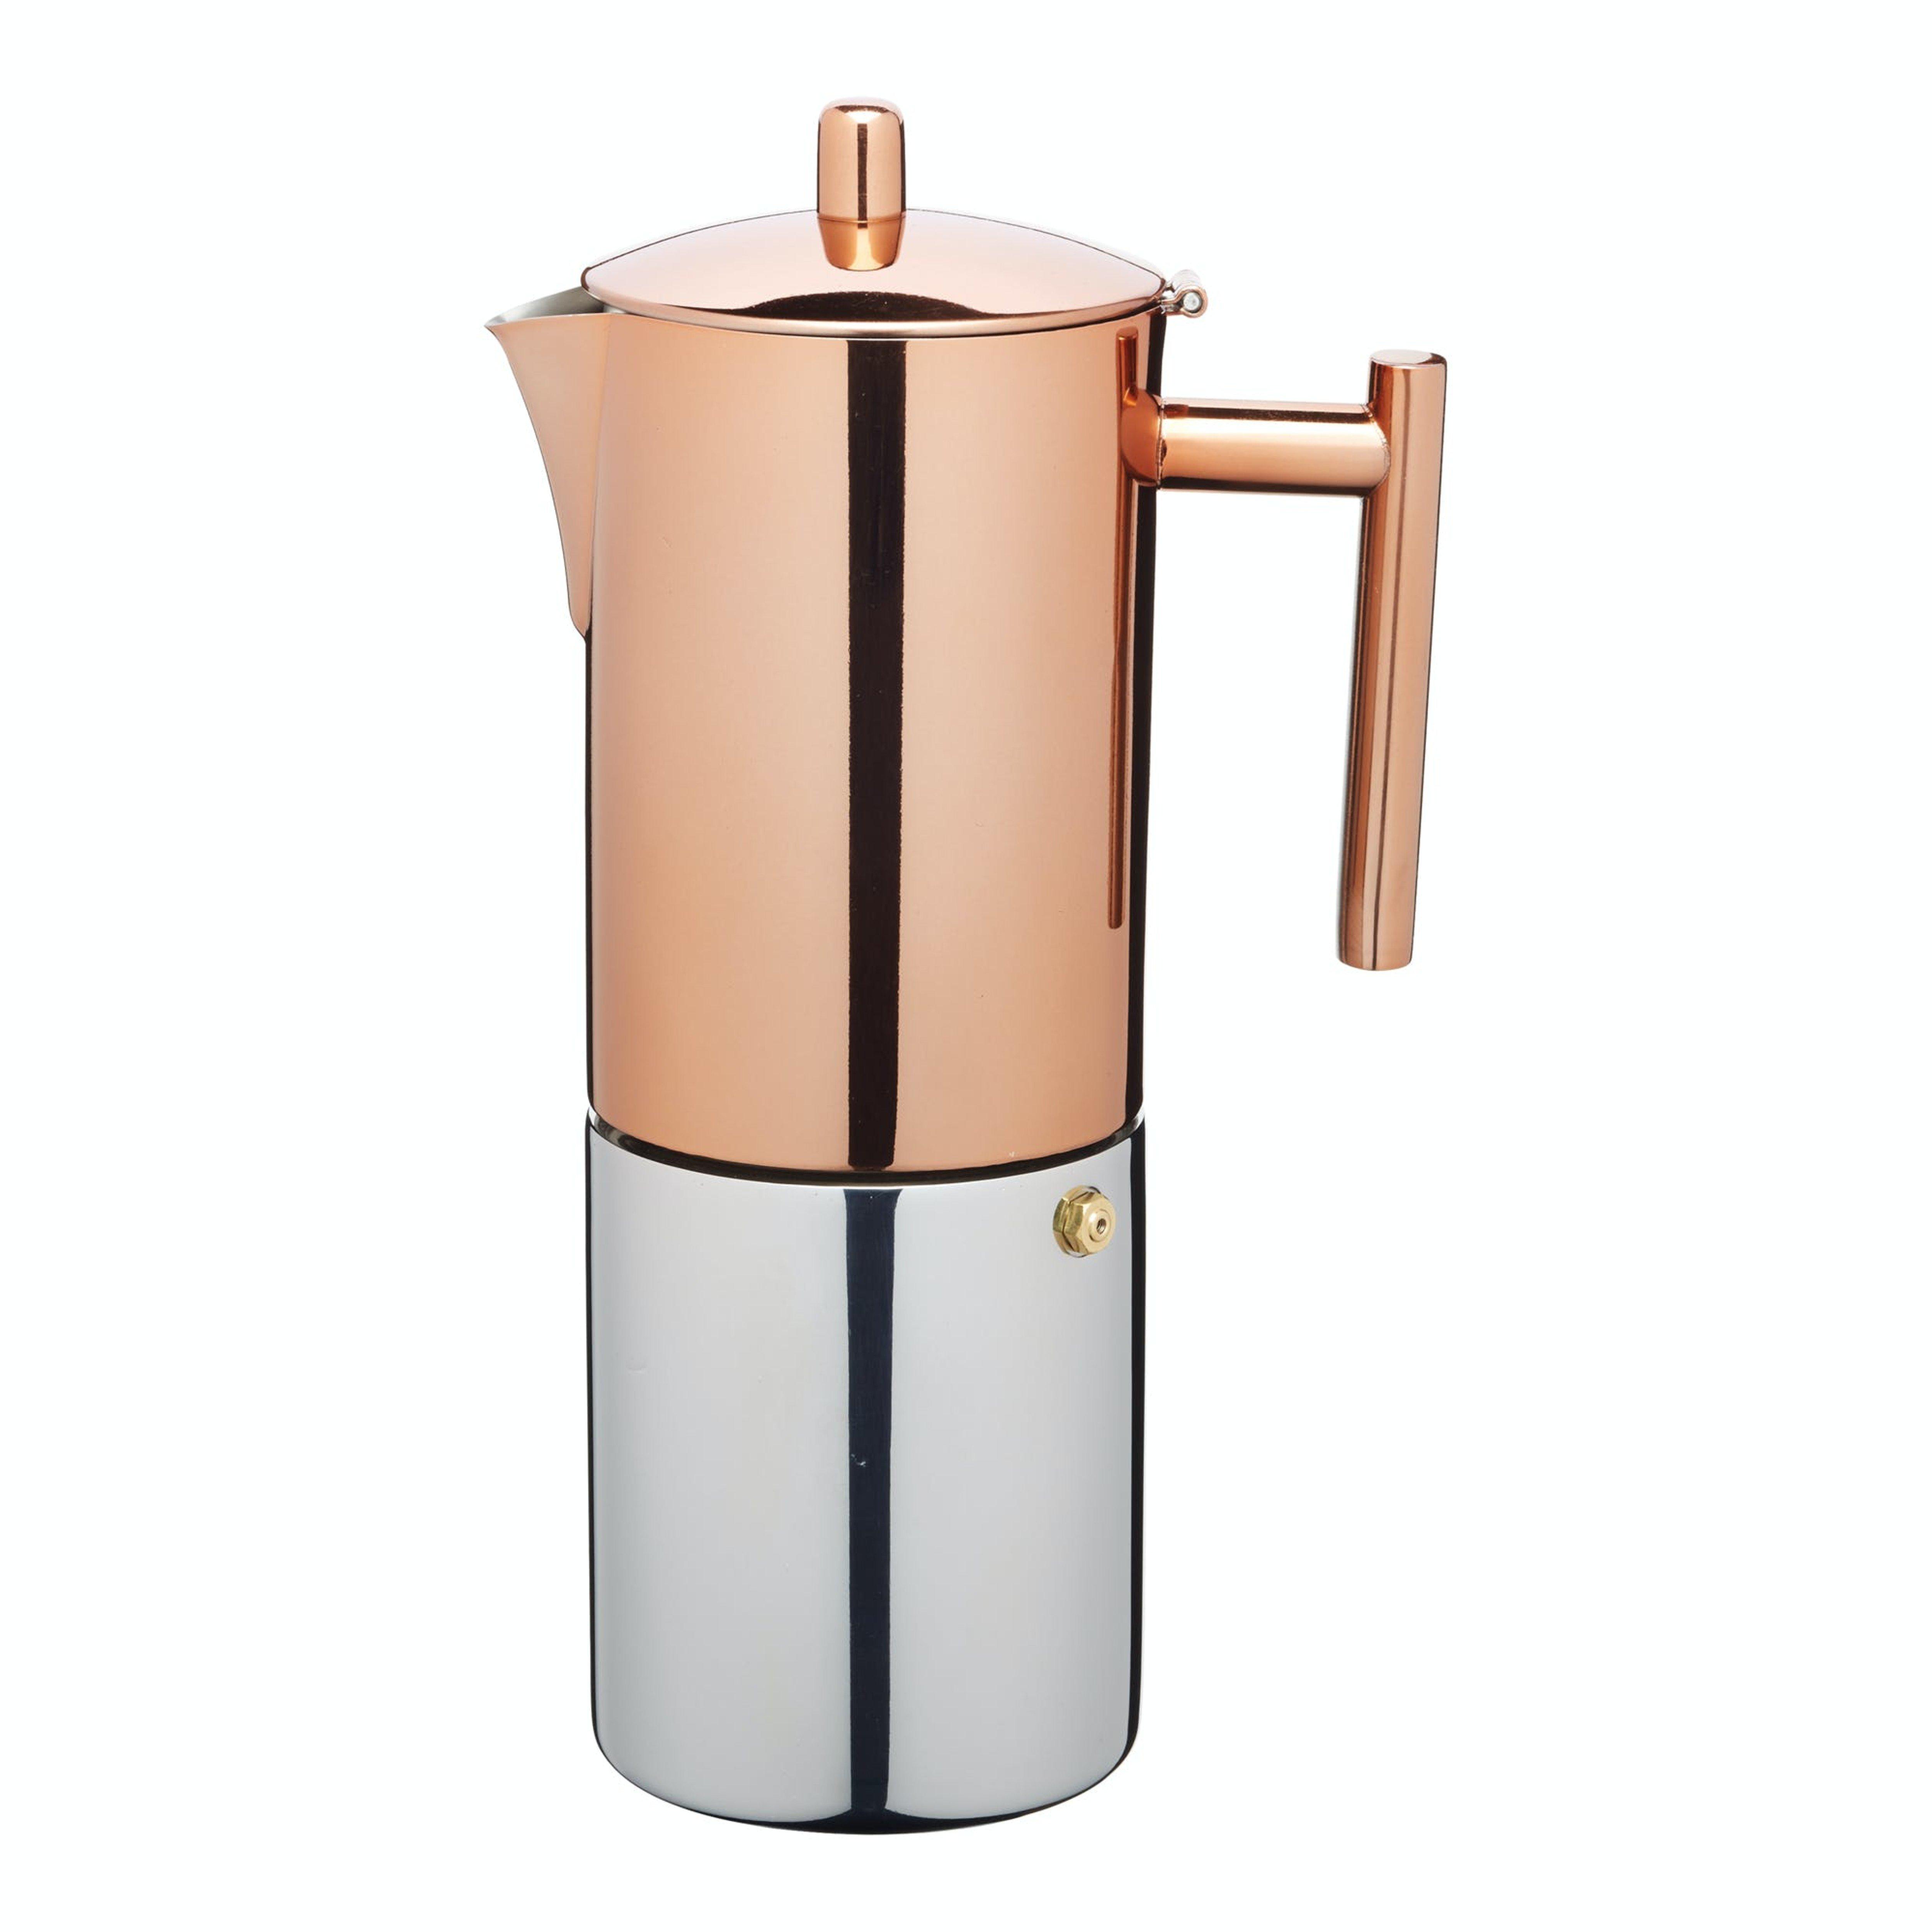 Copper Stovetop Espresso Maker - 10 cup, Gift Boxed